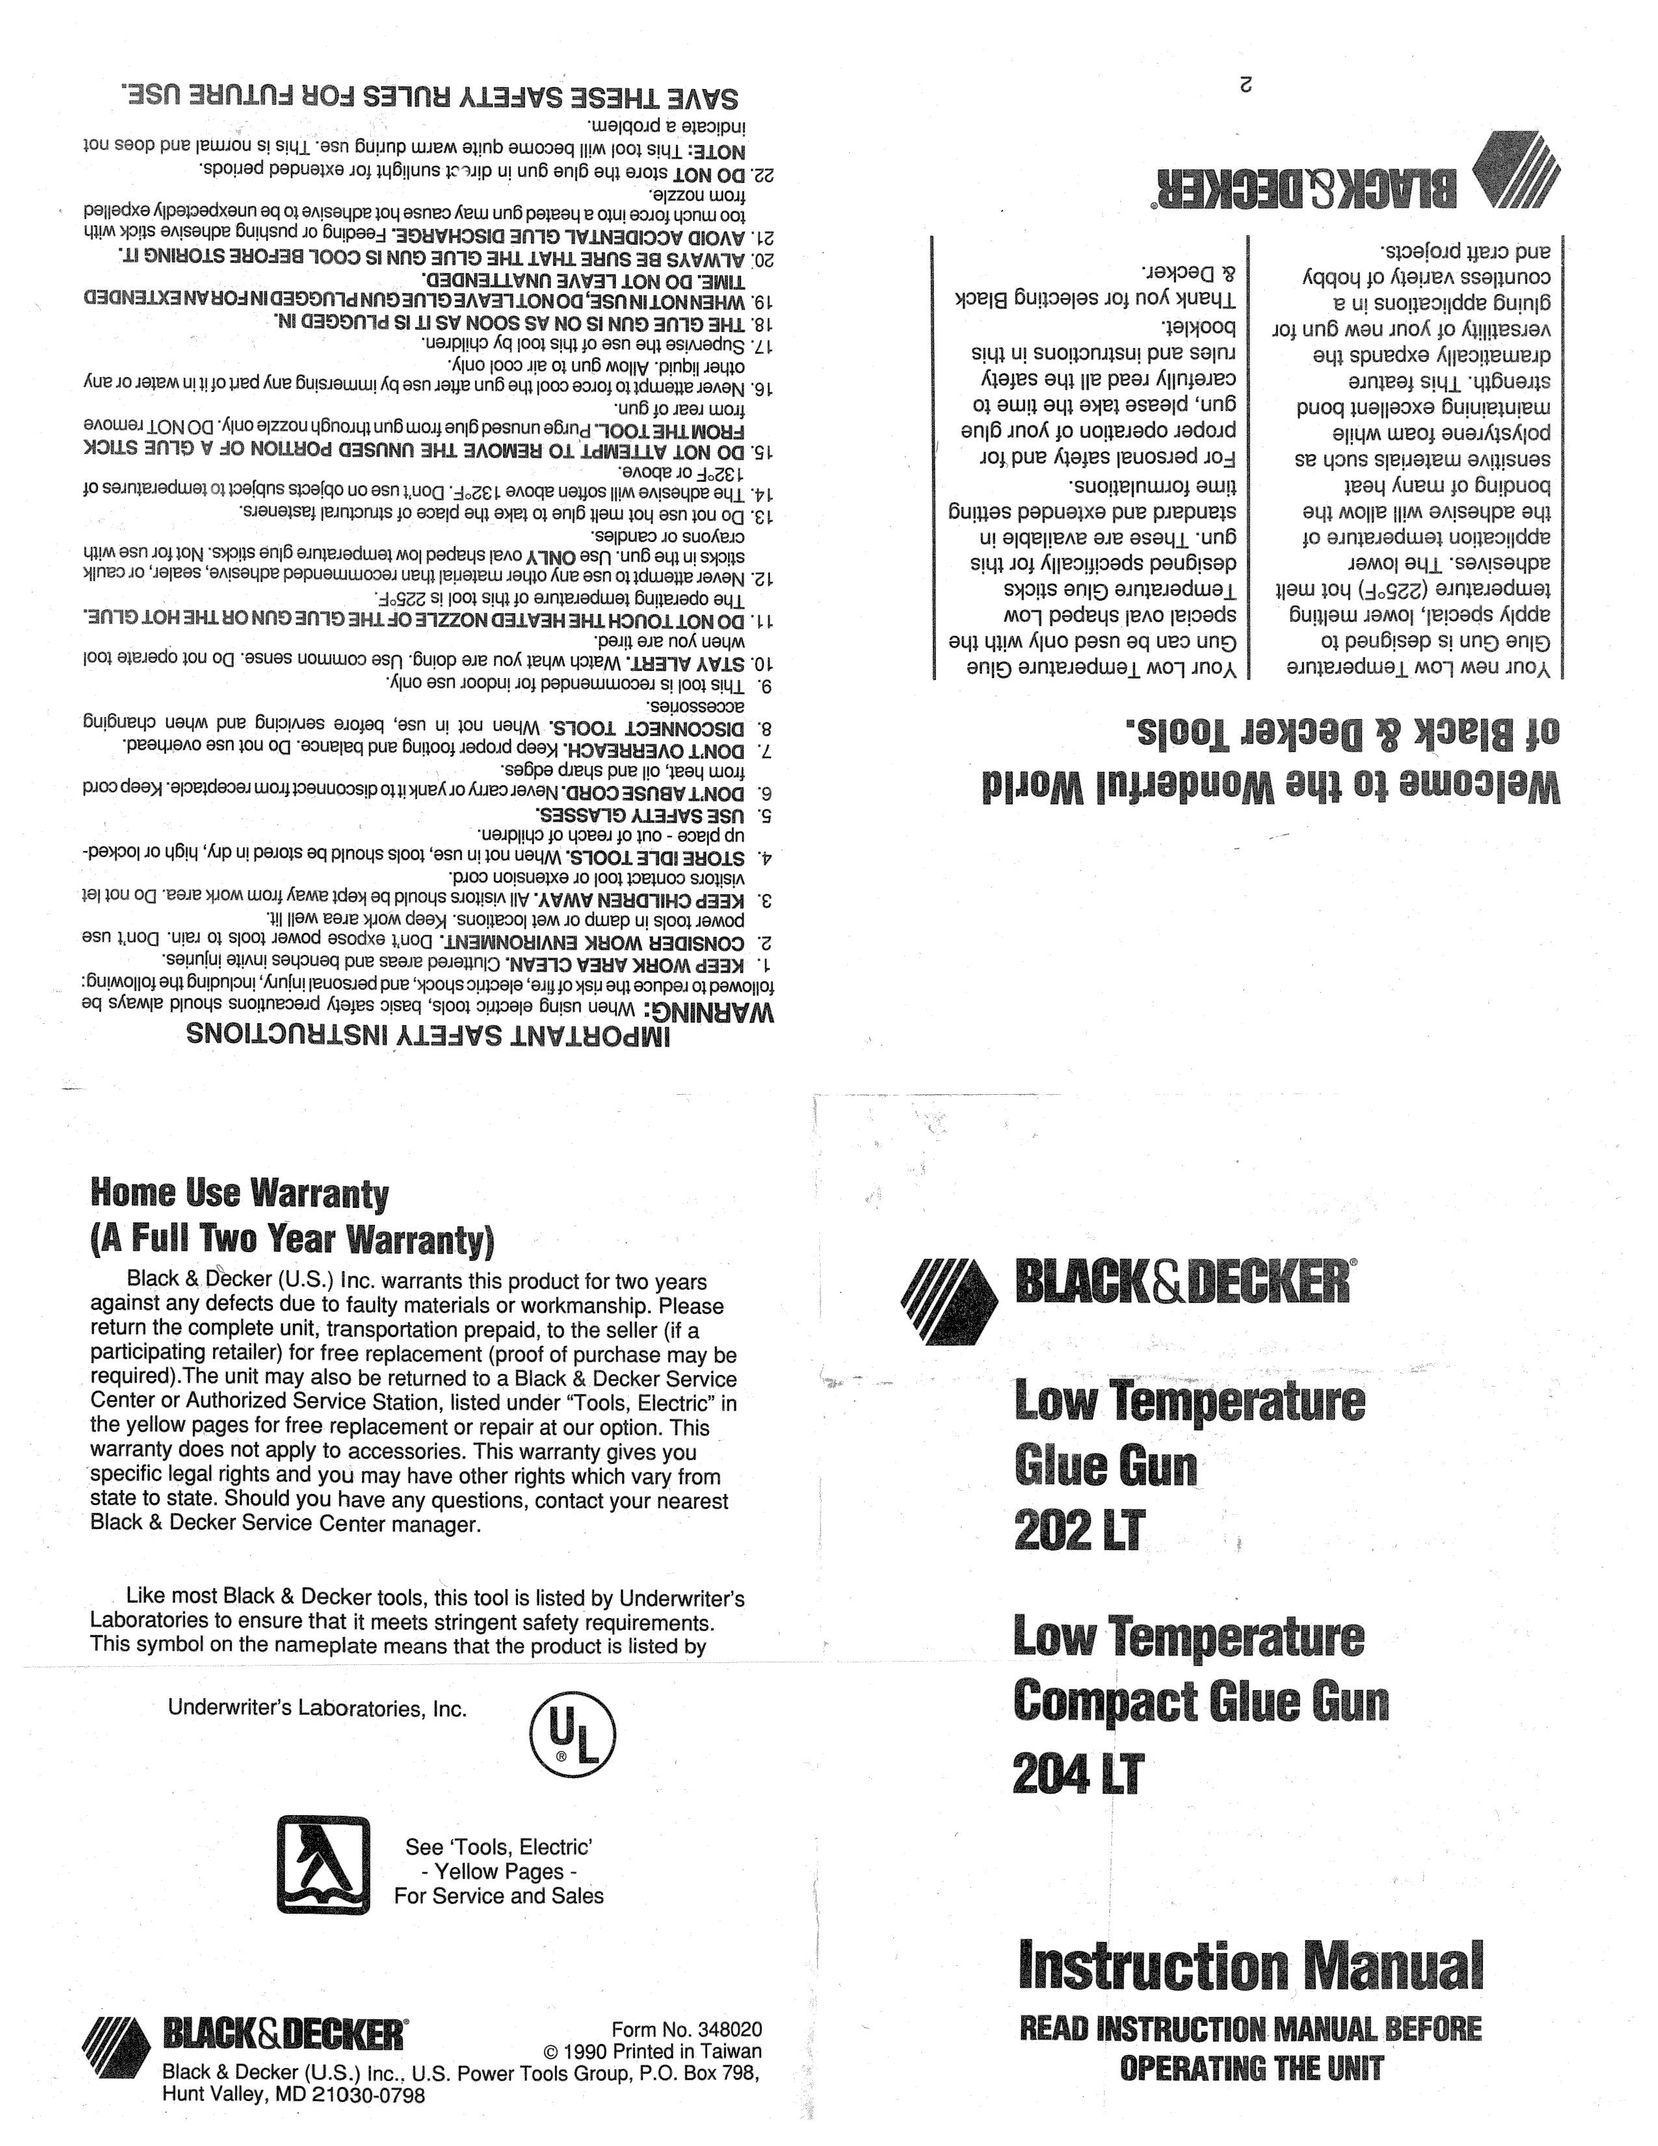 Black & Decker 202 LT Glue Gun User Manual